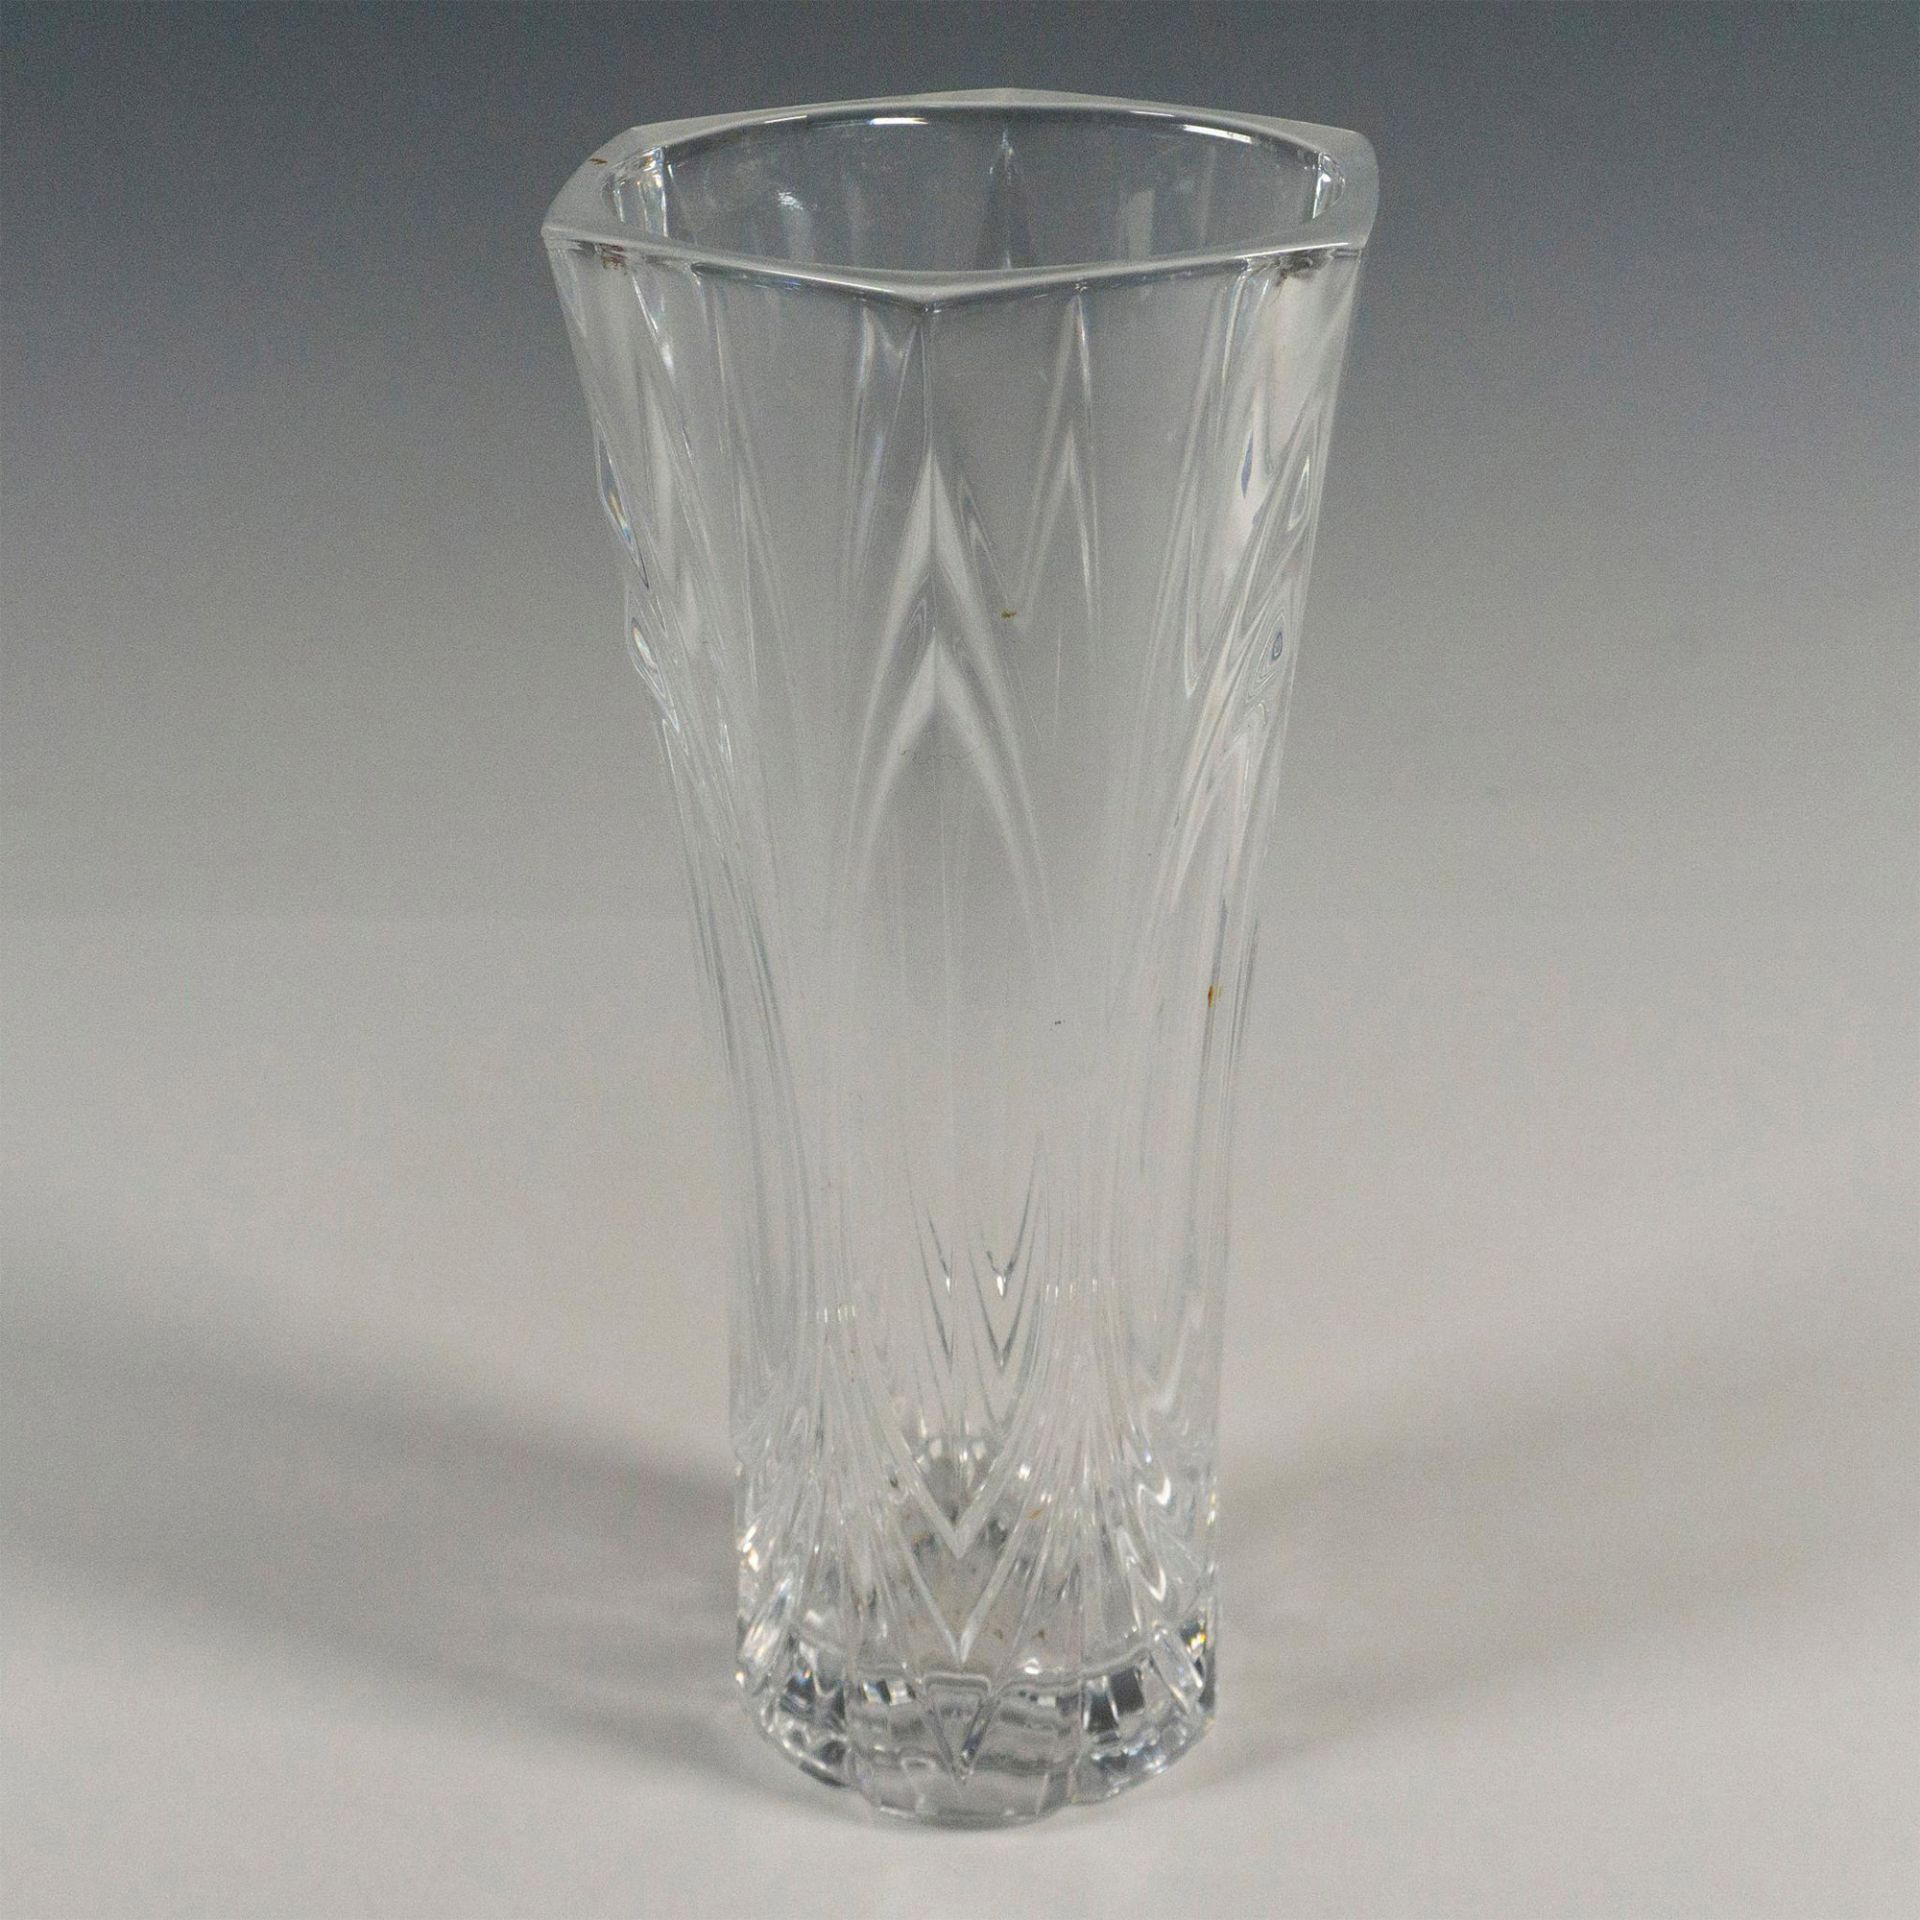 Cristal d'Arques Crystal Vase, Chatelet - Image 3 of 4